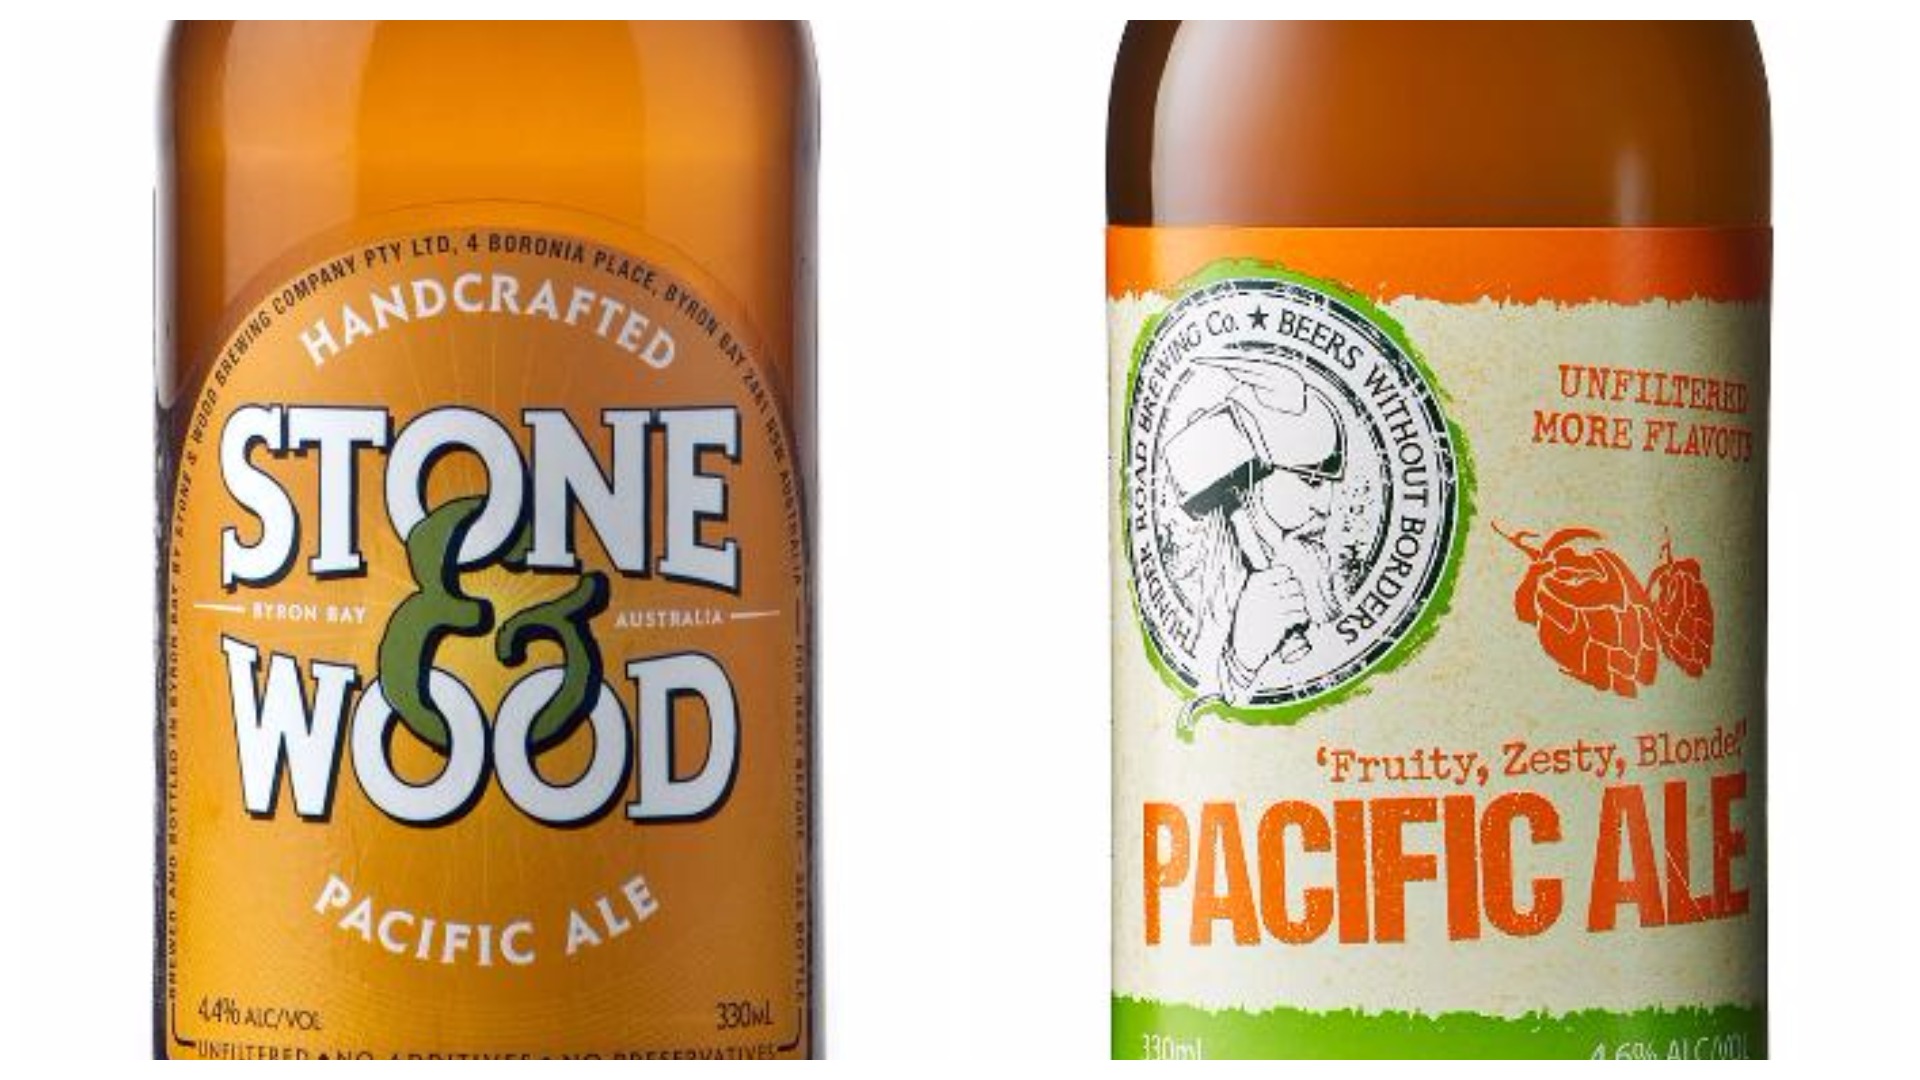 The Pacific Ale dispute began in 2015